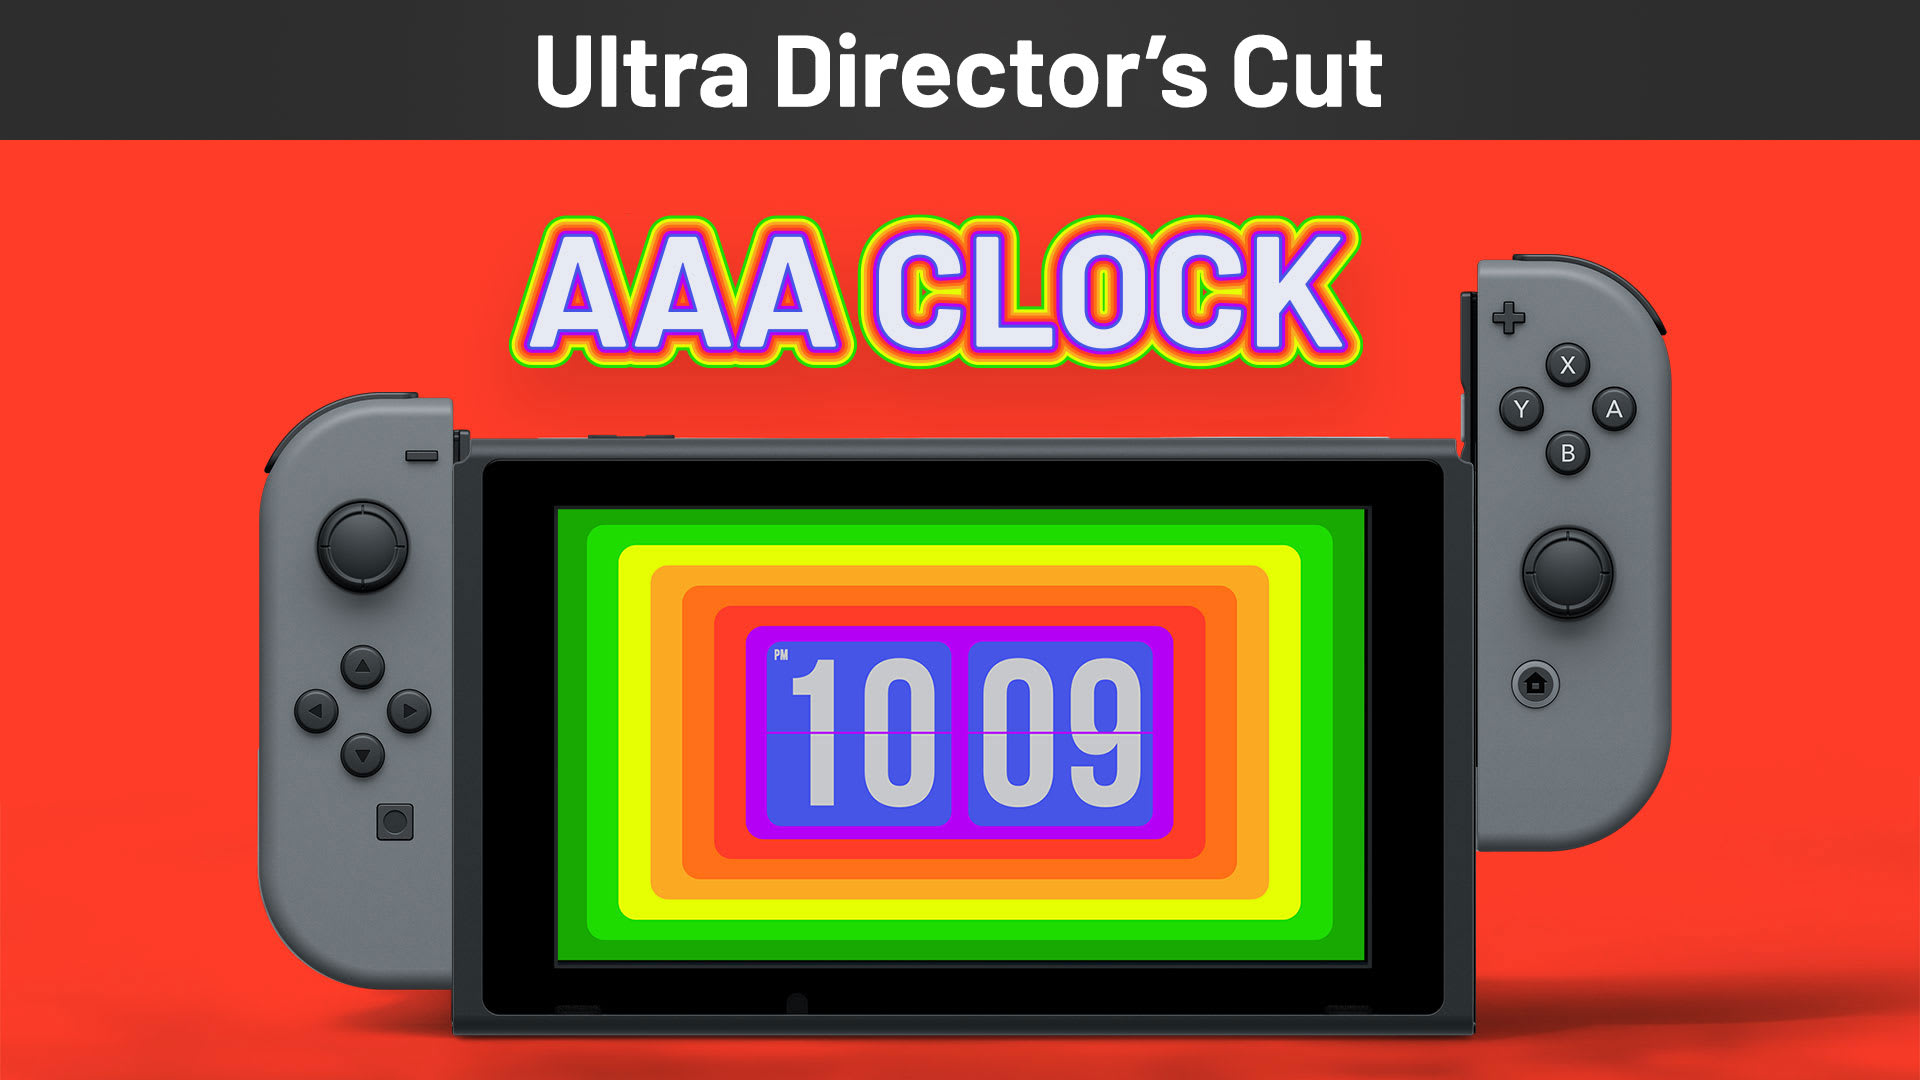 AAA Clock Ultra Director's Cut